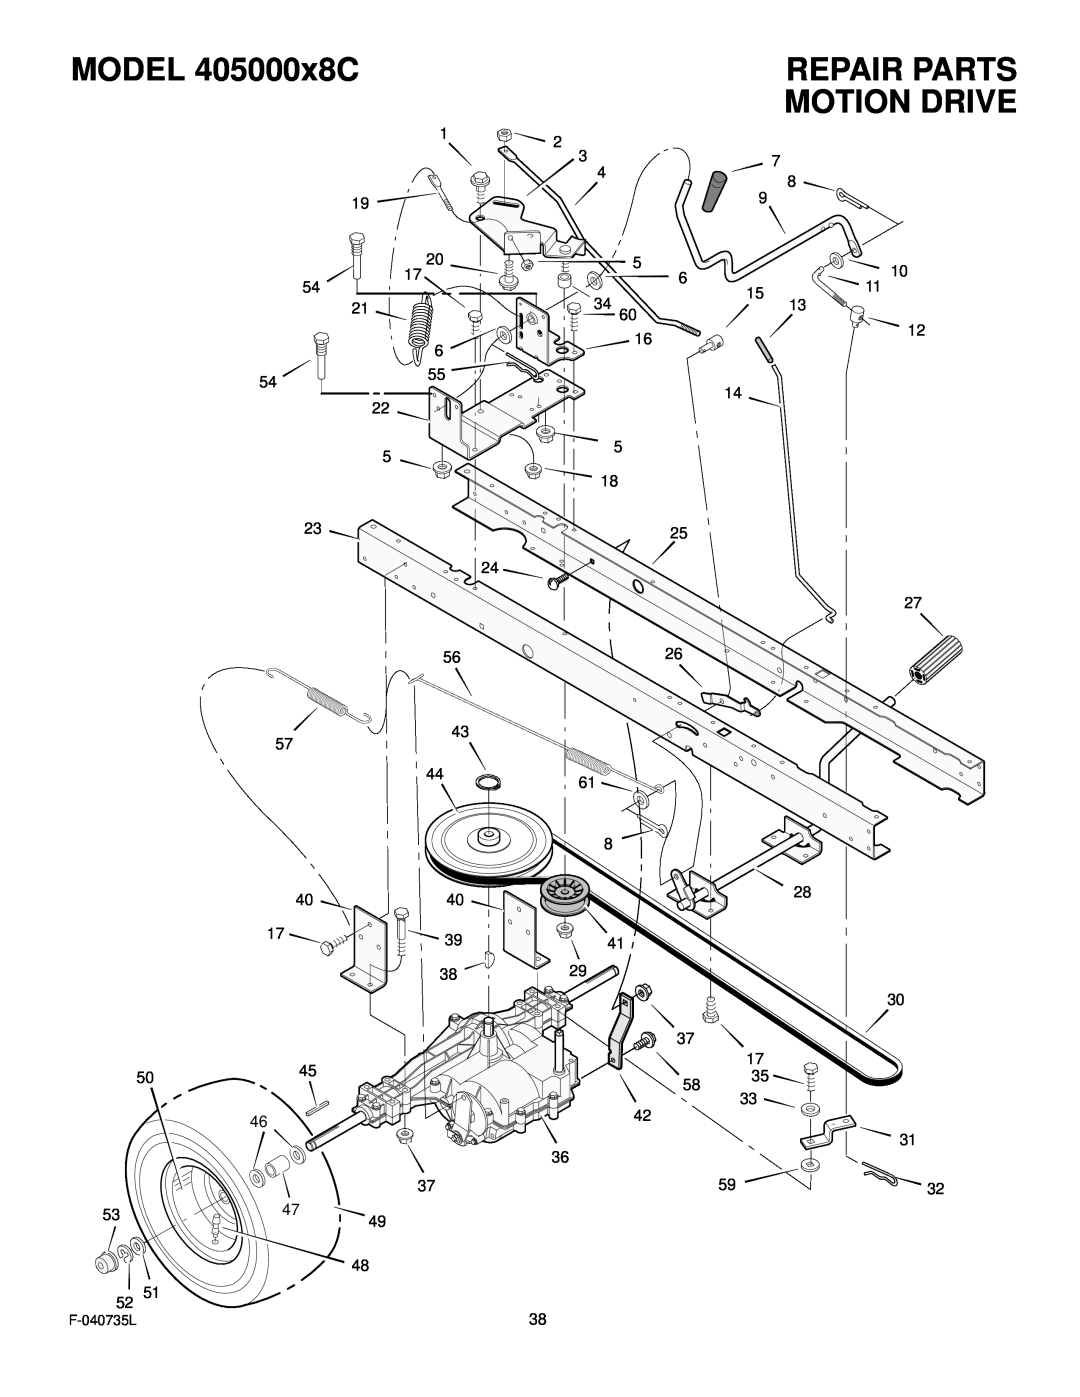 Murray manual Motion Drive, Repair Parts, MODEL 405000x8C, F-040735L 